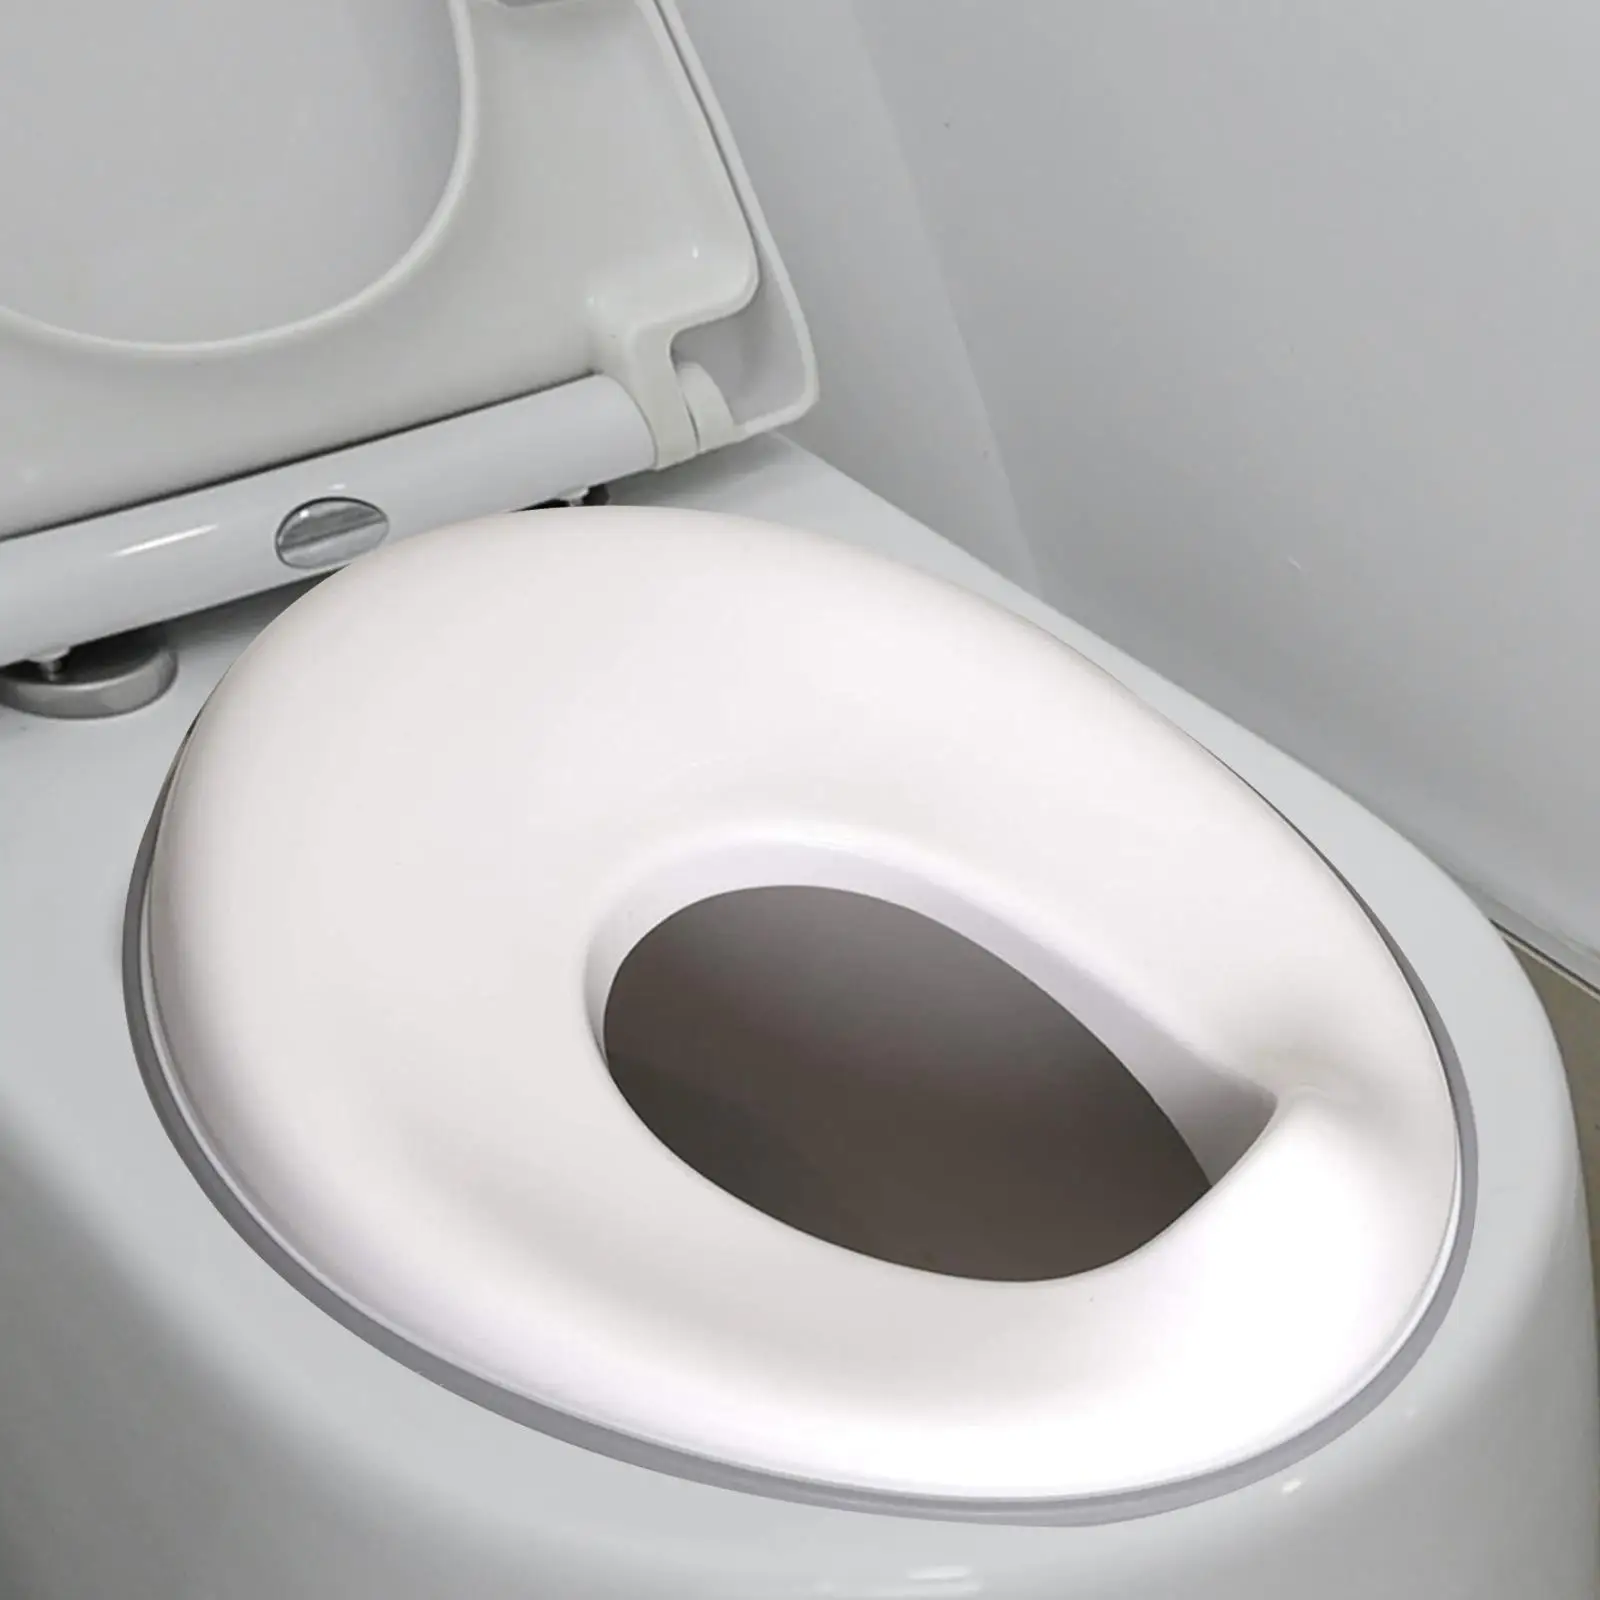 Toilet training Toilet Seat Fits Round & Oval Toilets with splash